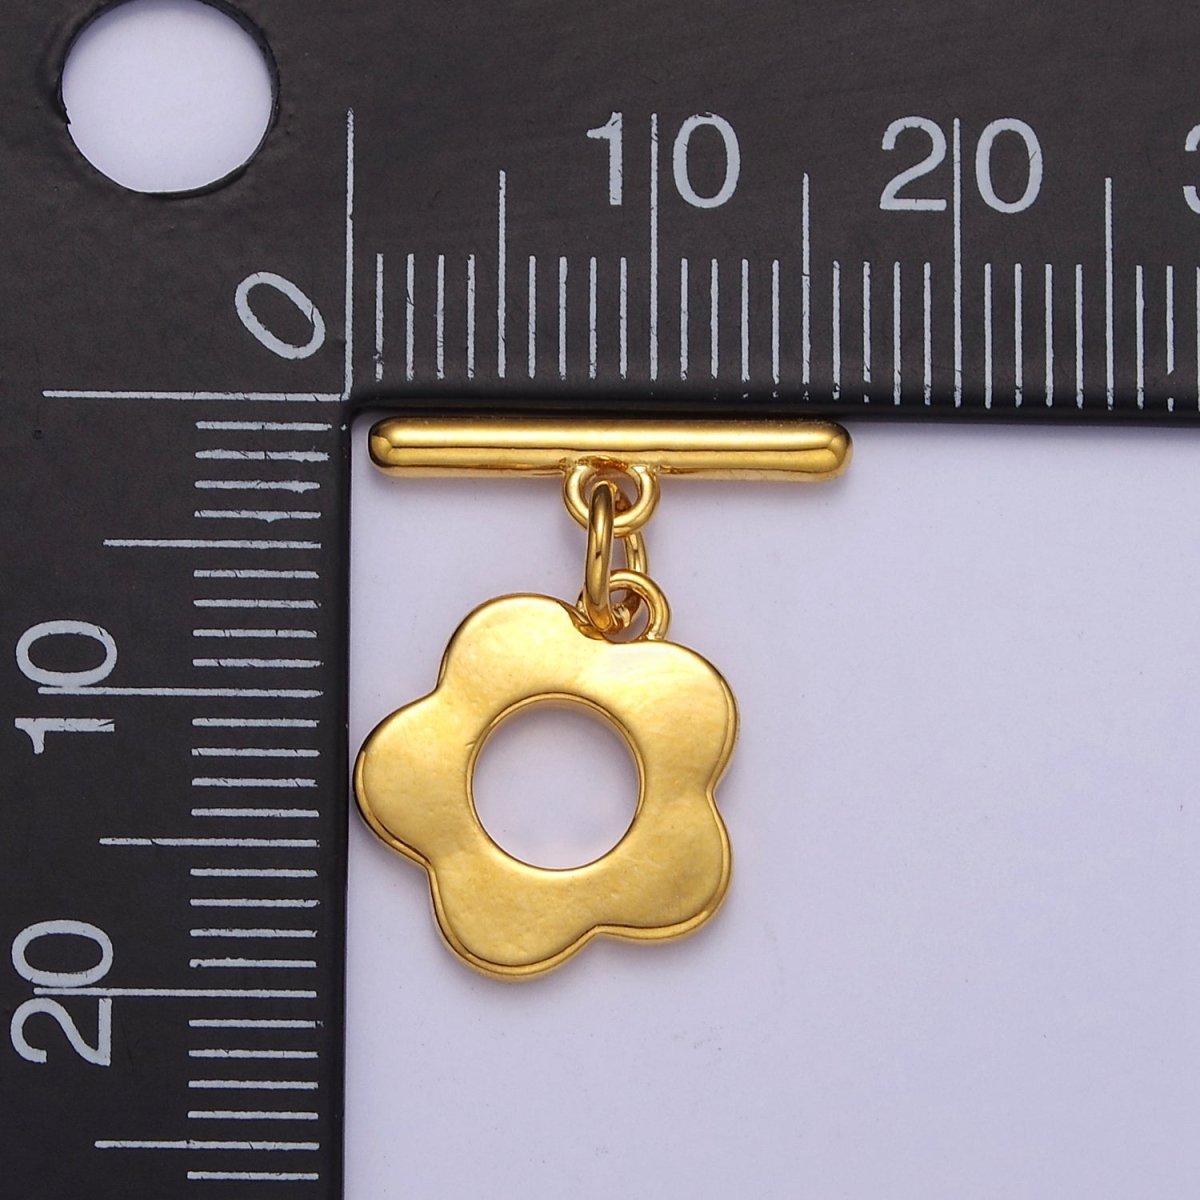 24k Gold Filled Flower Toggle Clasp, Jewelry Clasp OT Clasp Findings L-711 L-712 L-822 - DLUXCA